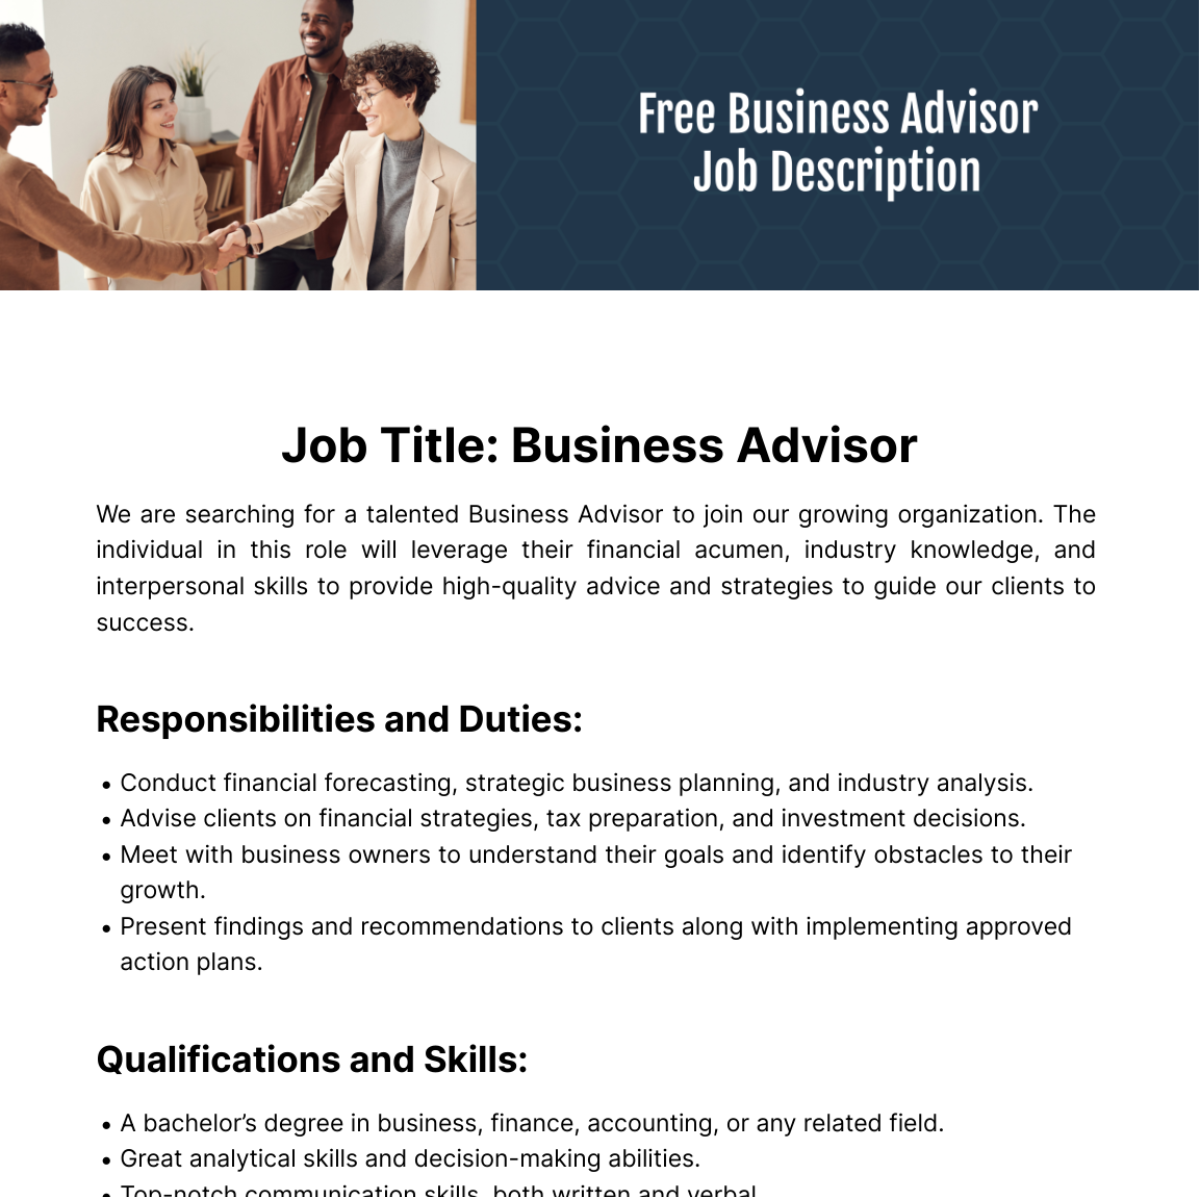 Free Business Advisor Job Description Template